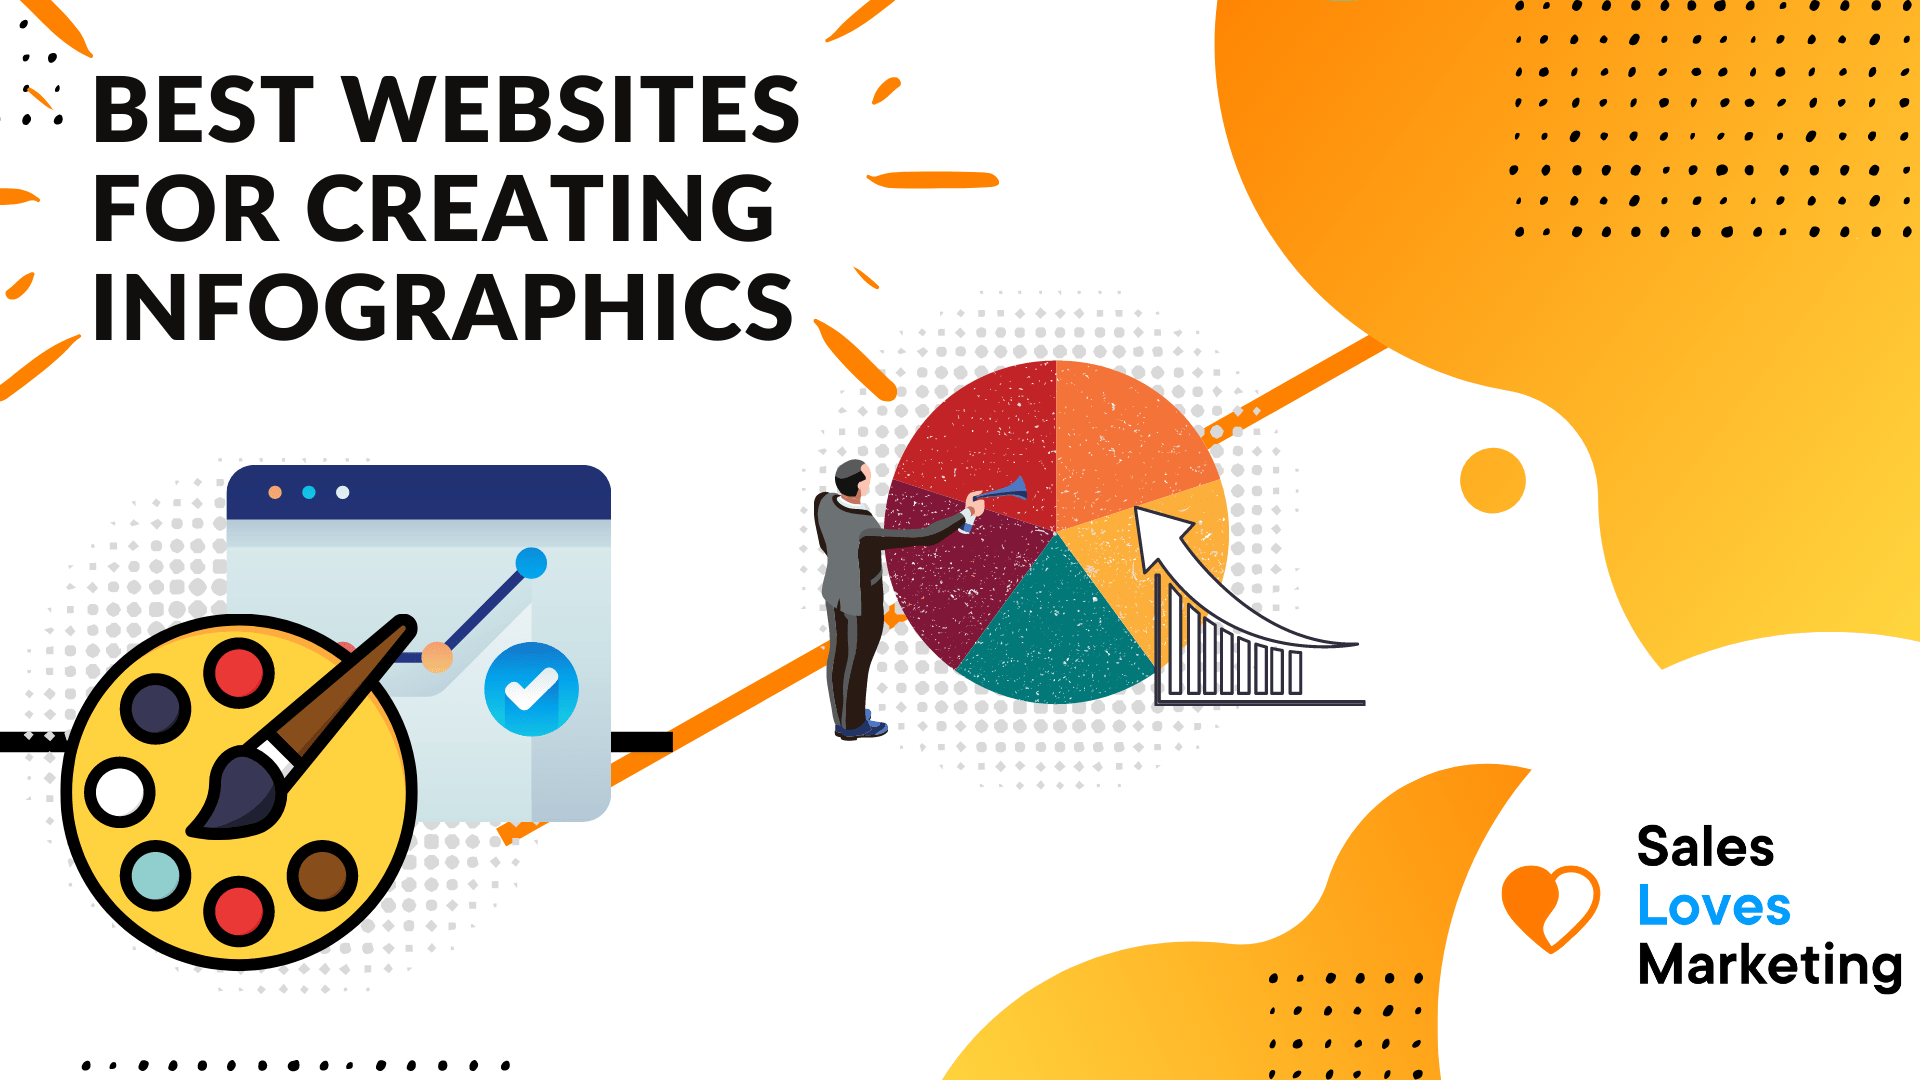 Top 10 Best Websites for Creating Infographics